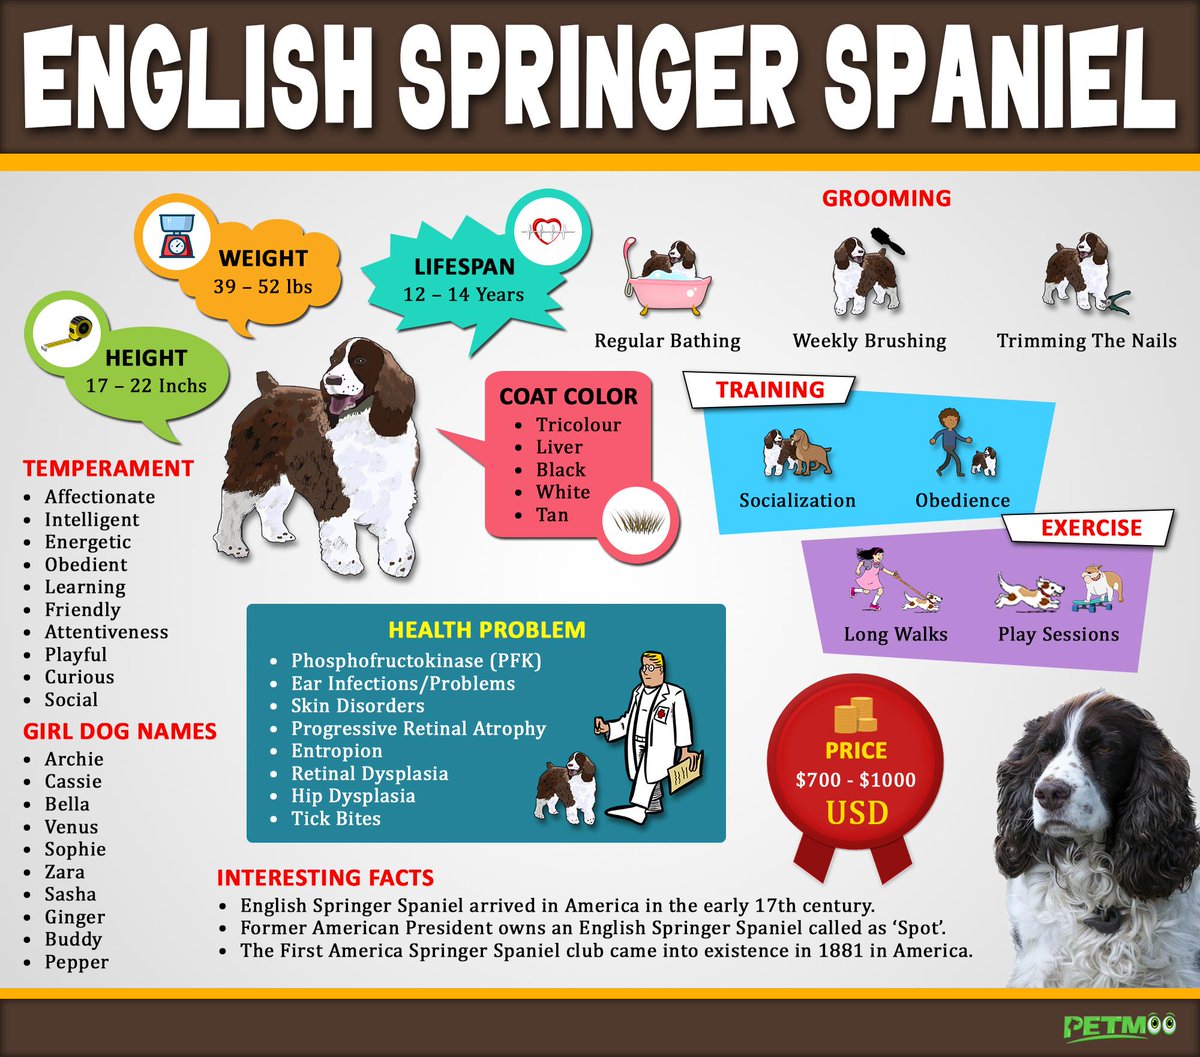 English Springer Spaniel
#petmoo #pets #dogs #doginfographic #englishspringerspaniel #englishspringerspanielinfographic